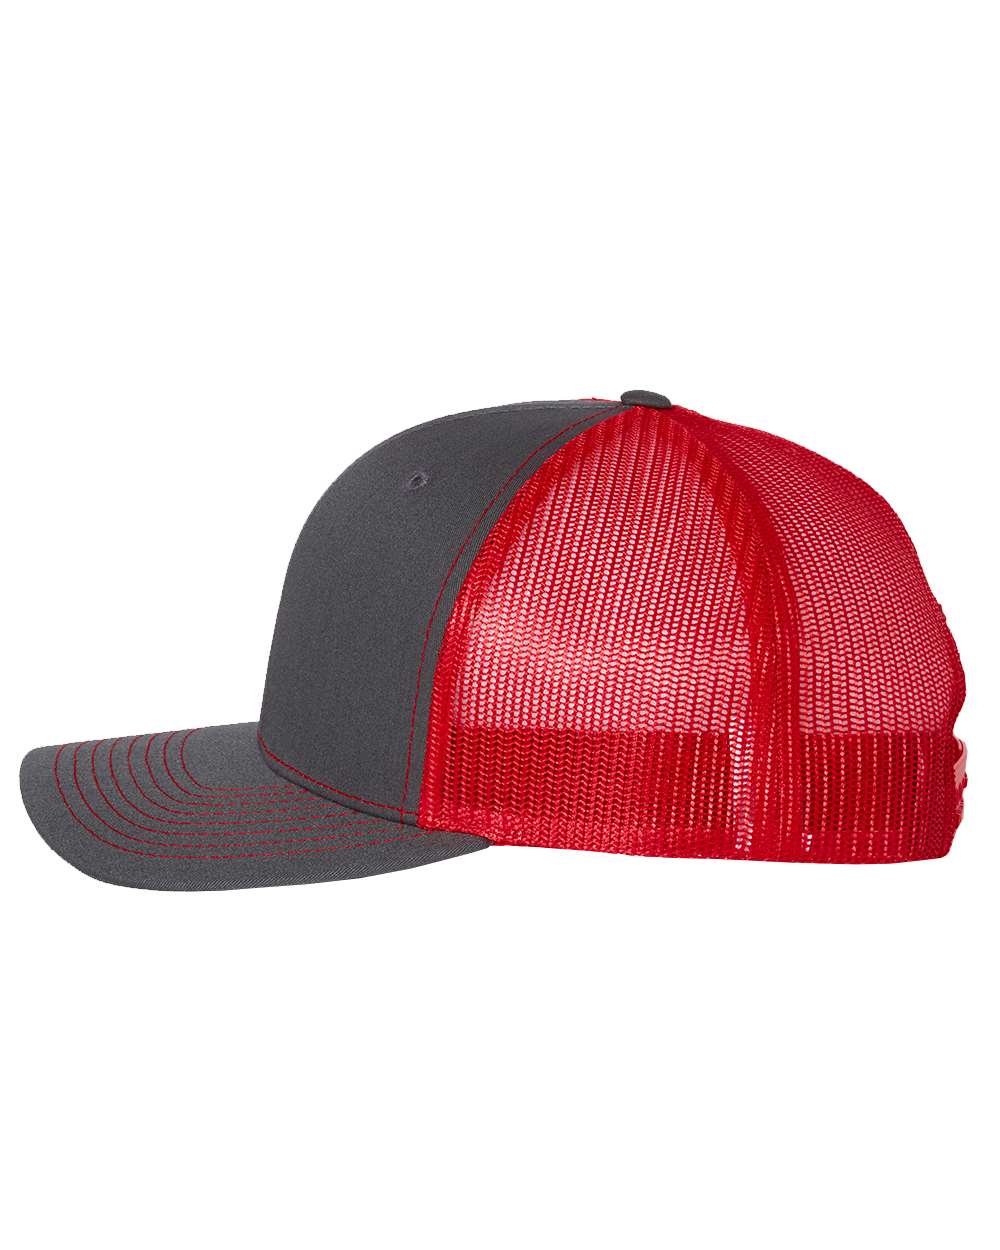 Richardson Adjustable Customized Snapback Trucker Caps, Charcoal Red